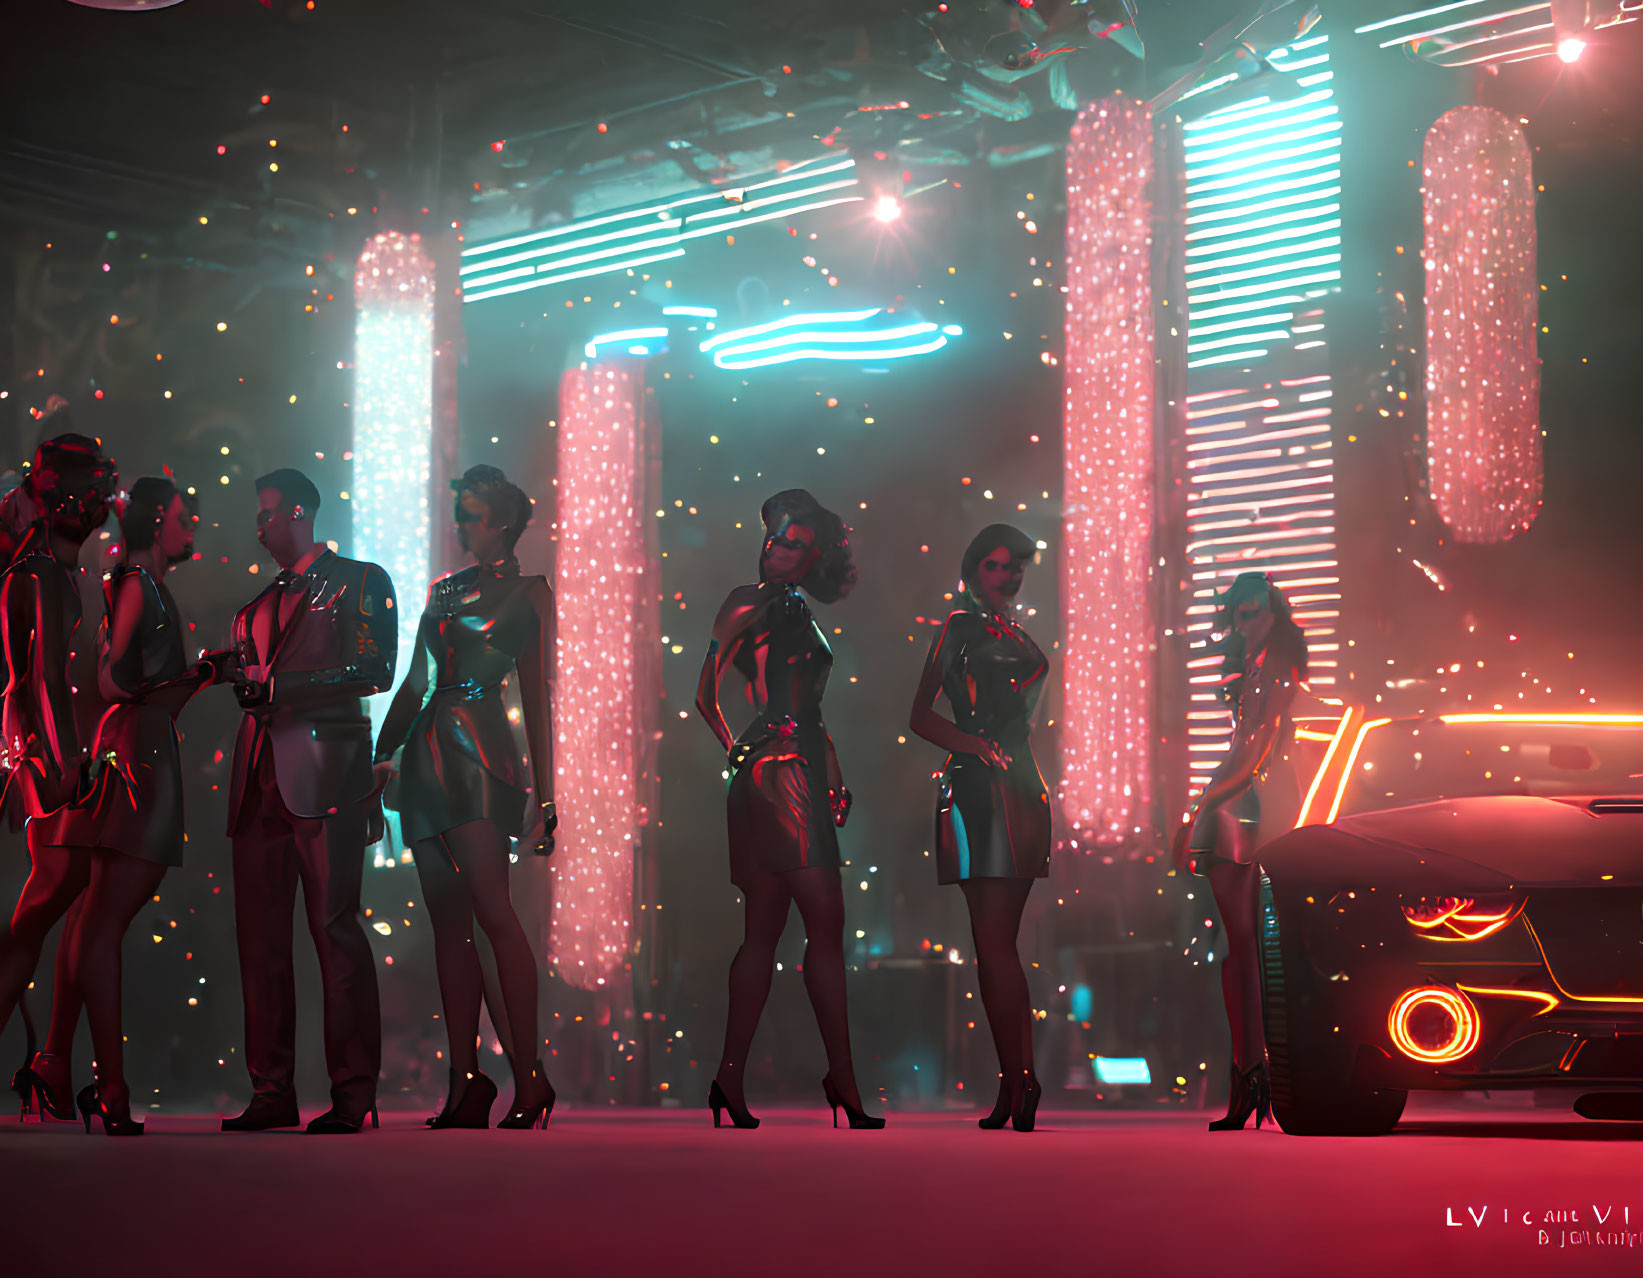 Stylish People by Sleek Car in Futuristic Nightclub with Neon Lights